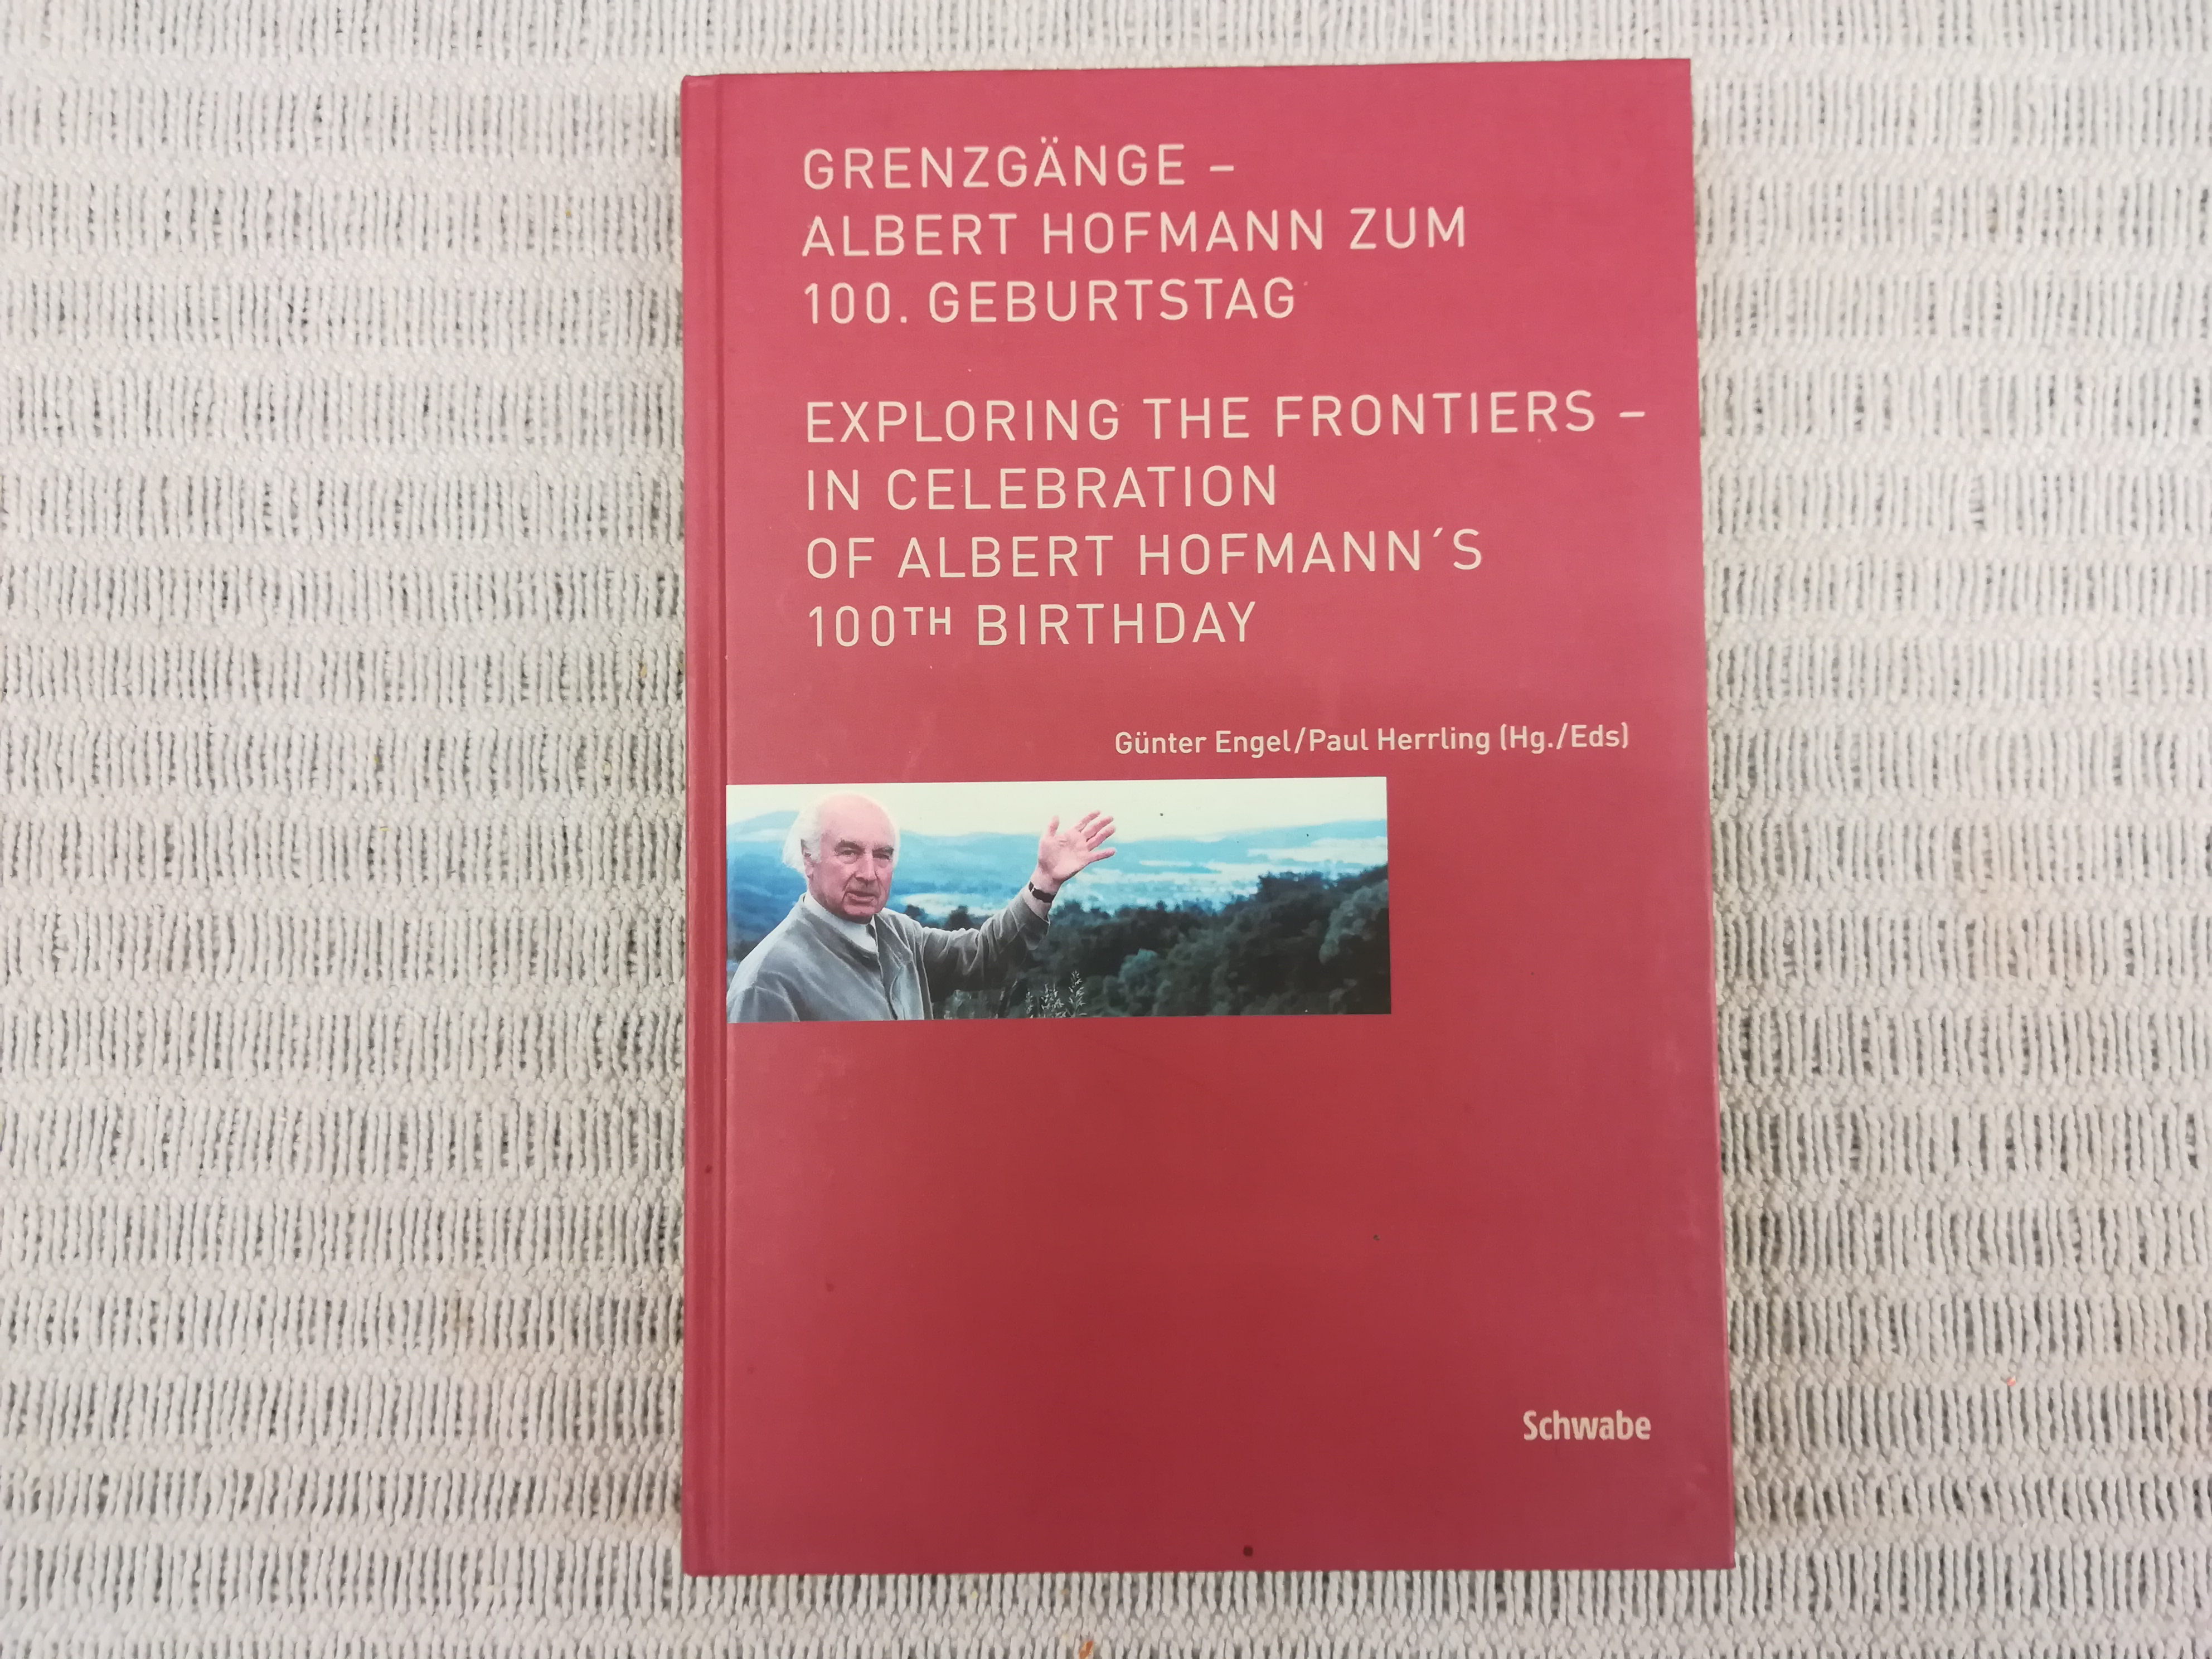 Grenzgänge - Albert Hofmann zum 100. Geburtstag. Exploring the frontiers - in celebration of Albert Hofmann's 100th birthday - ENGEL, Günther & HERRLING, Paul (Hg./Eds)